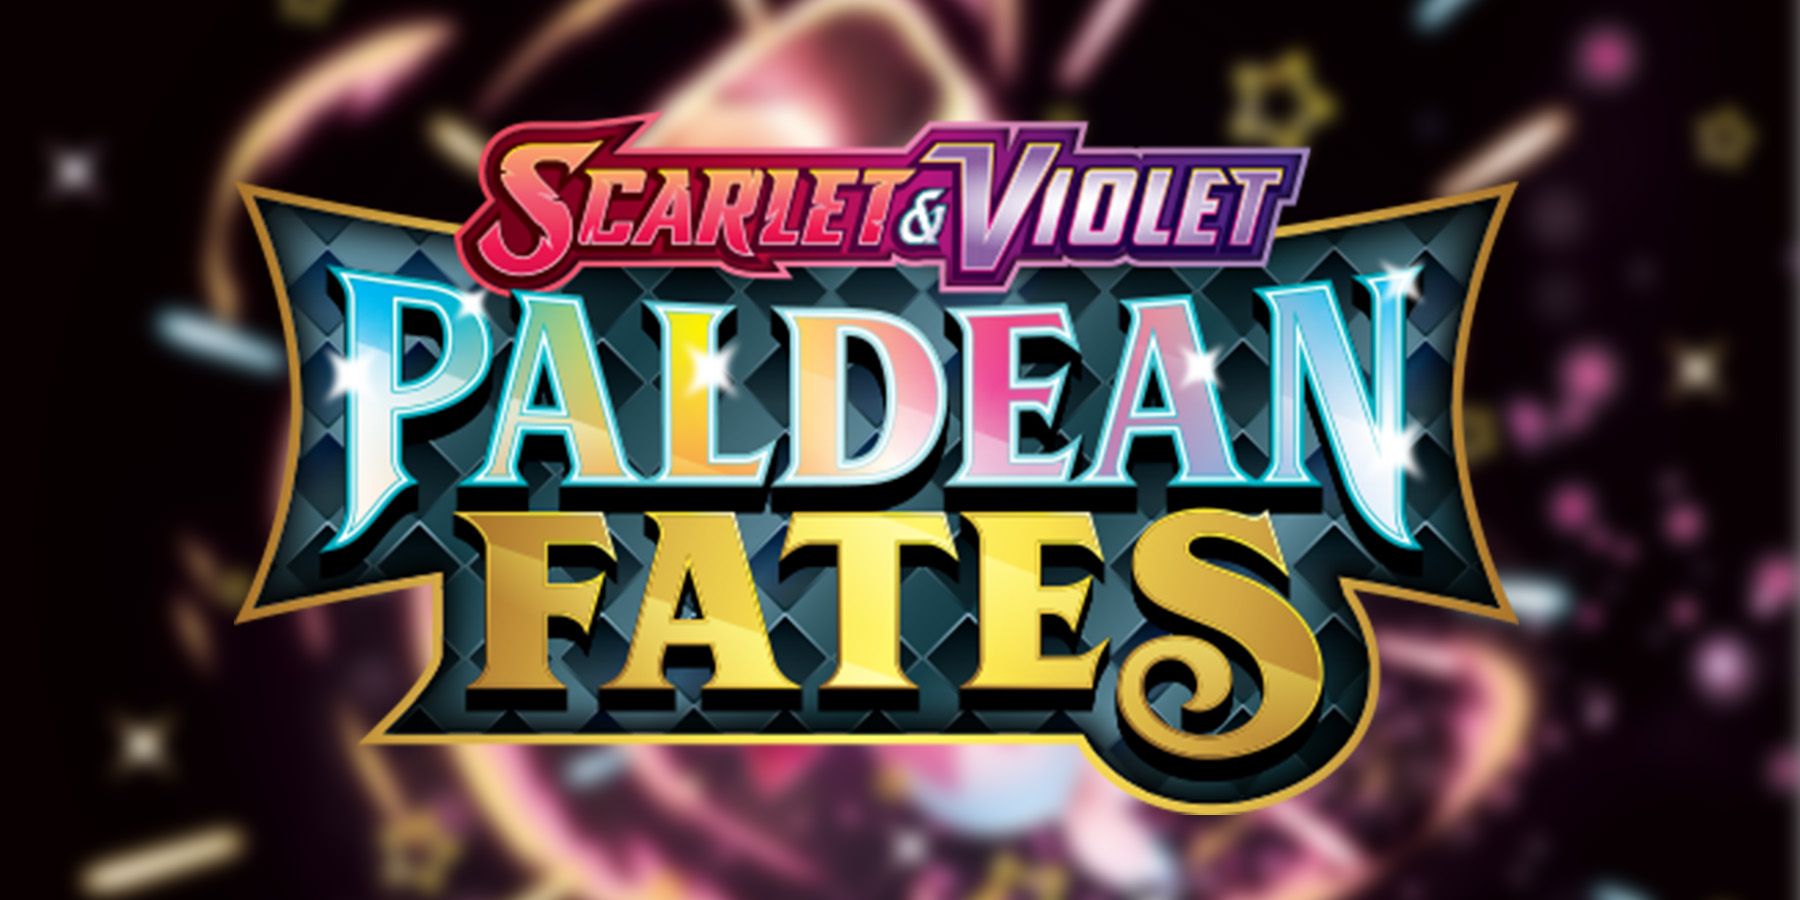 Scarlet and Violet Paldean Fates Pokemon TCG logo over blurred background